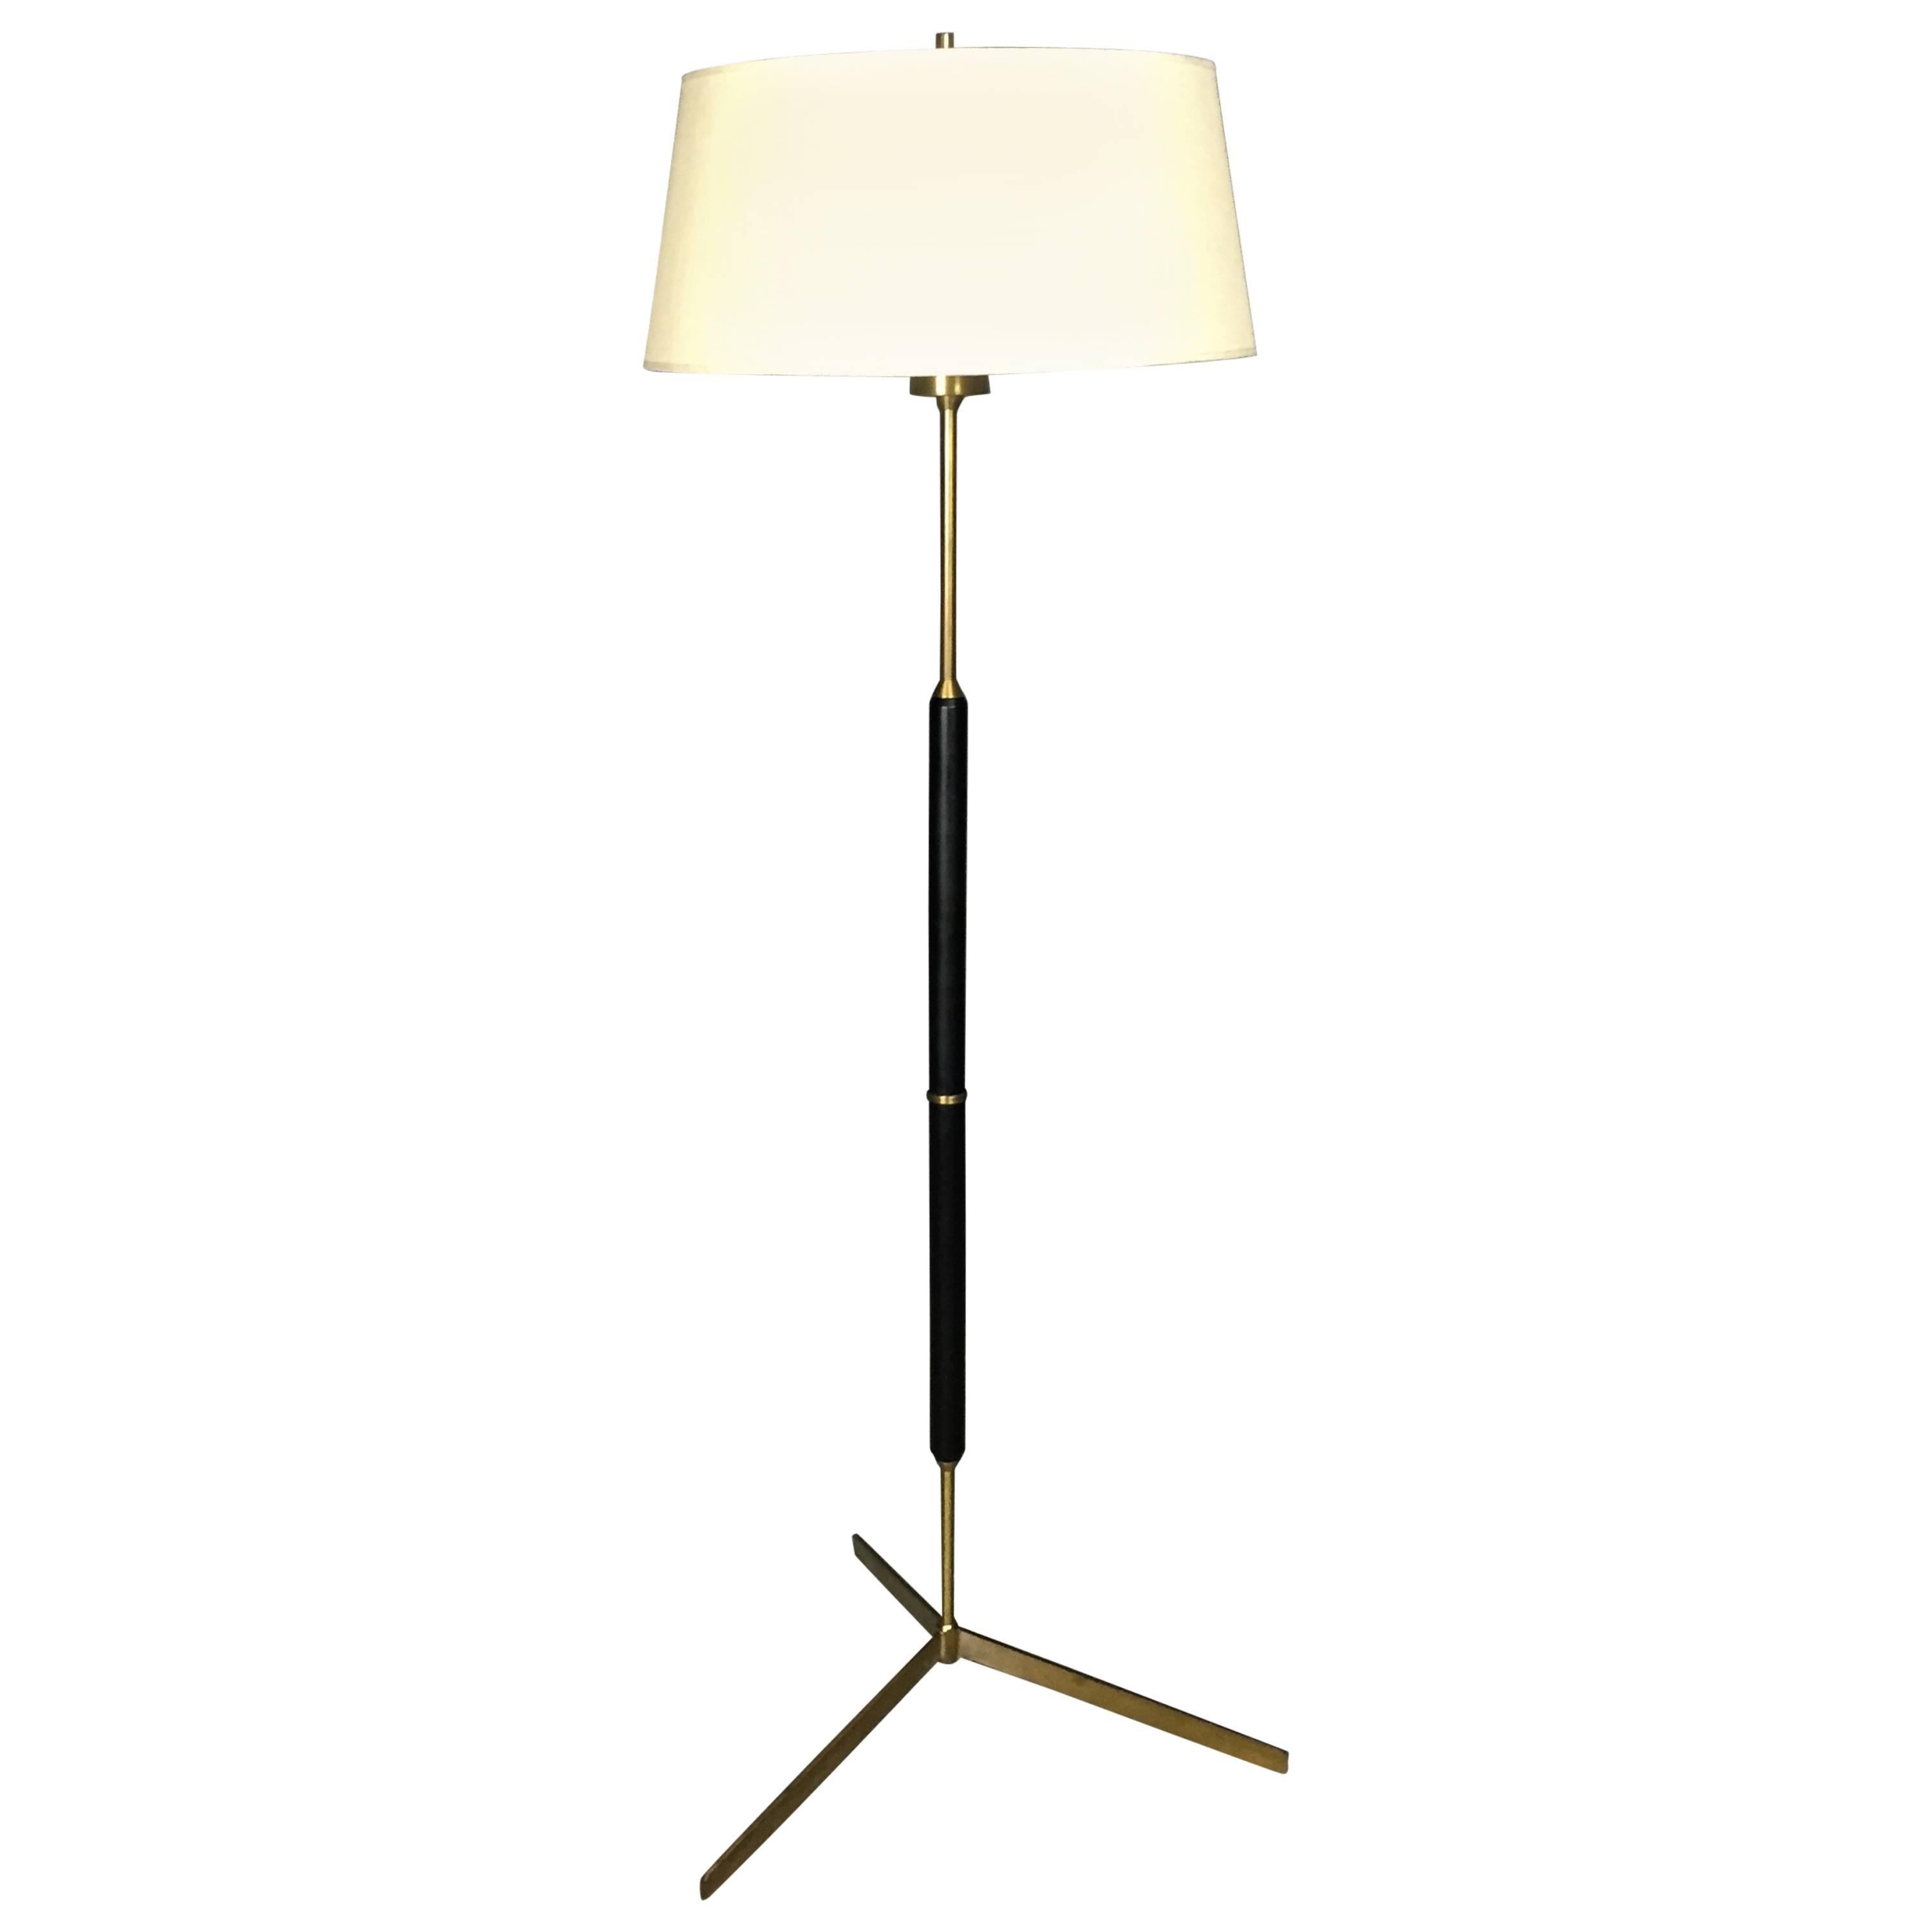 Hans BergströM Brass and Enameled Wood Floor Lamp, Sweden 1940s